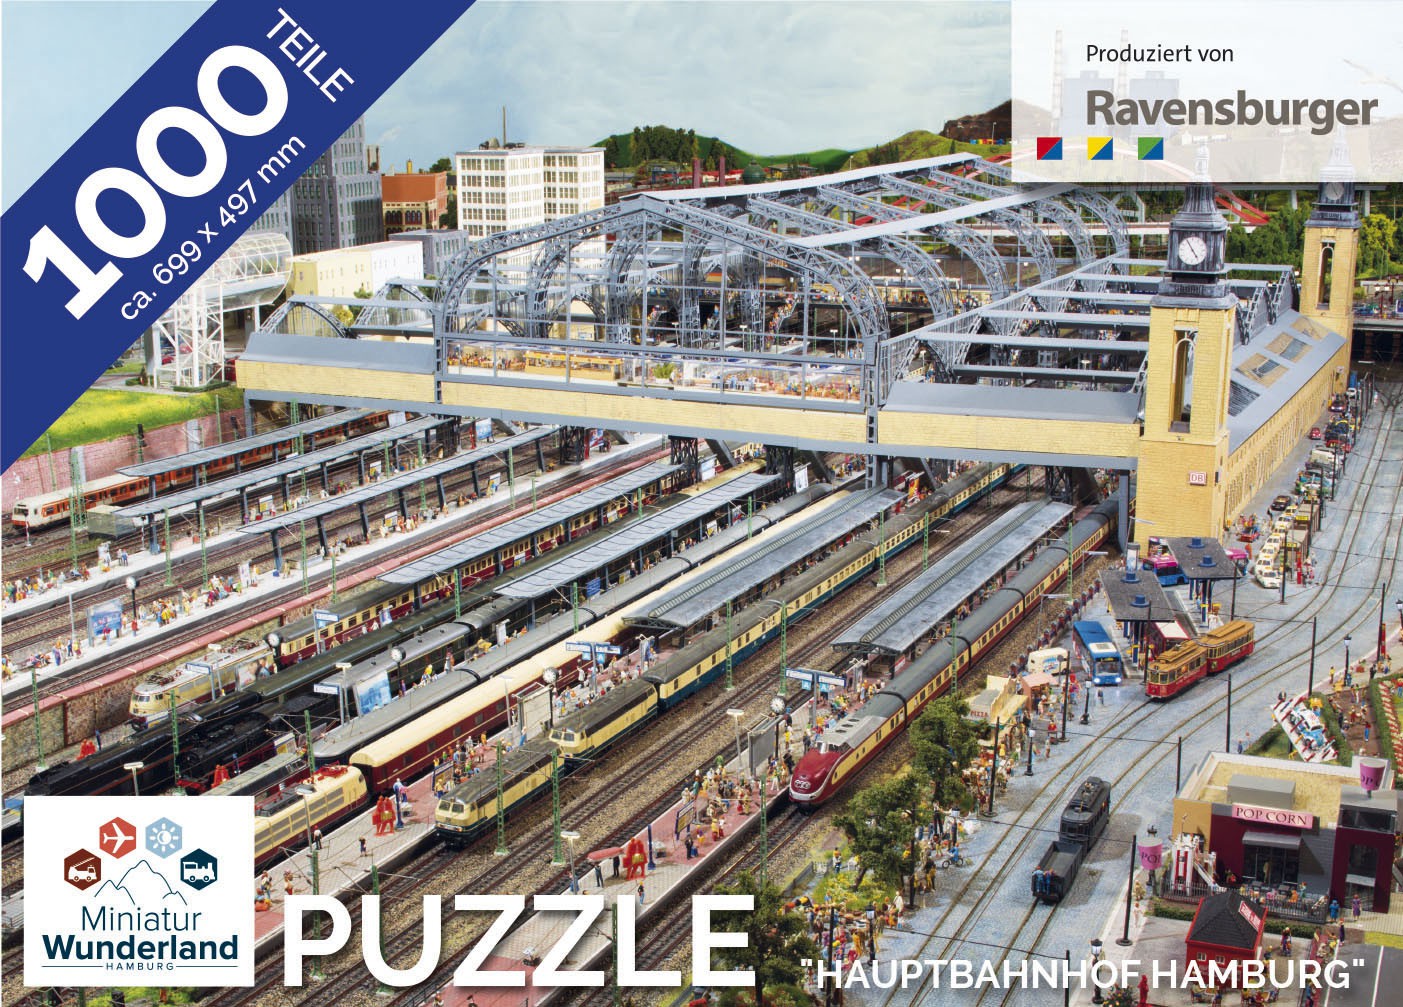 Puzzle "Hauptbahnhof" 1000 Teile von Ravensburger